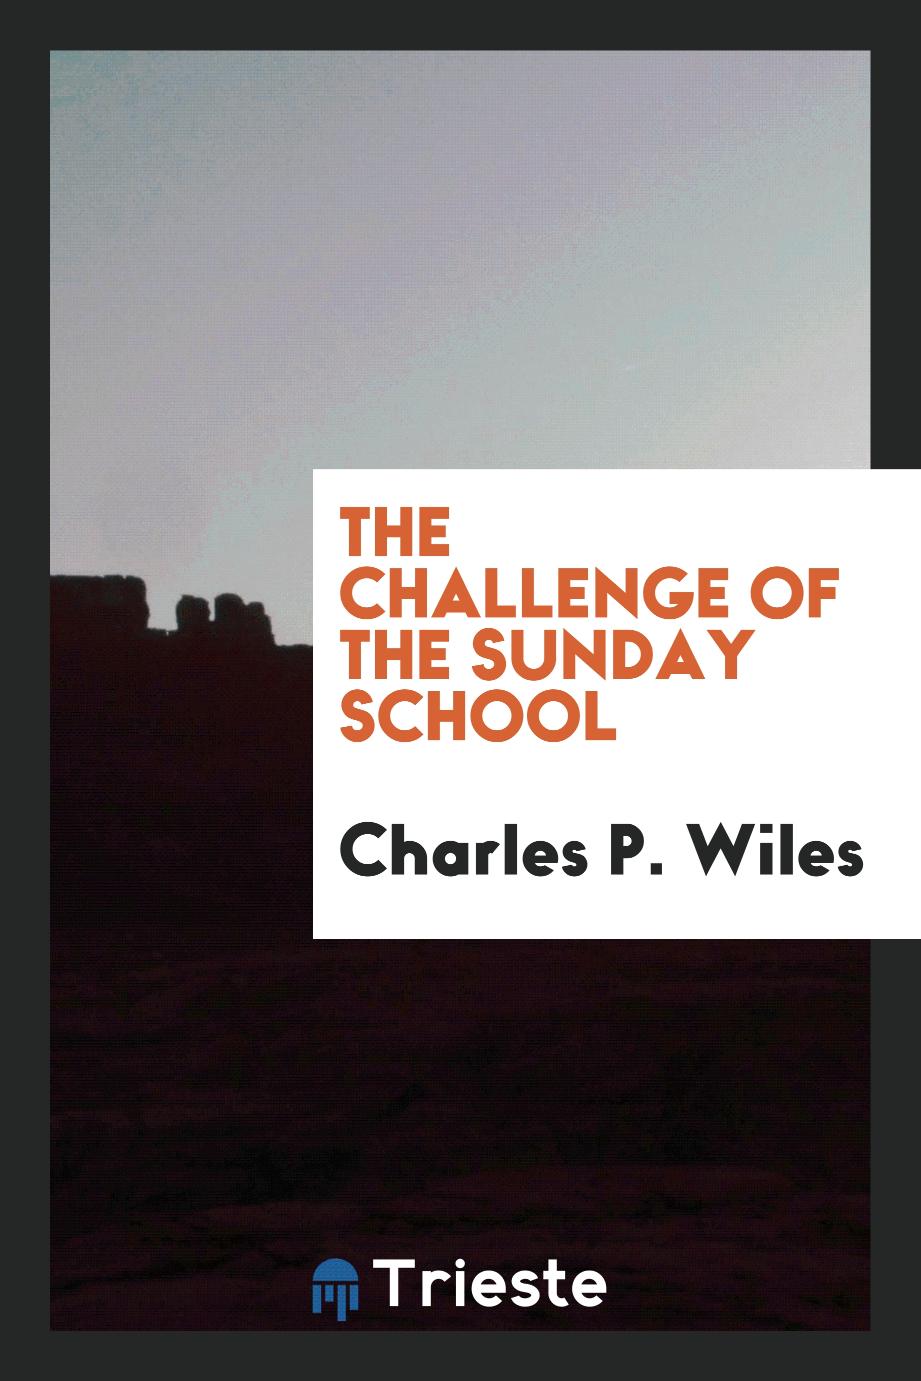 The challenge of the Sunday school